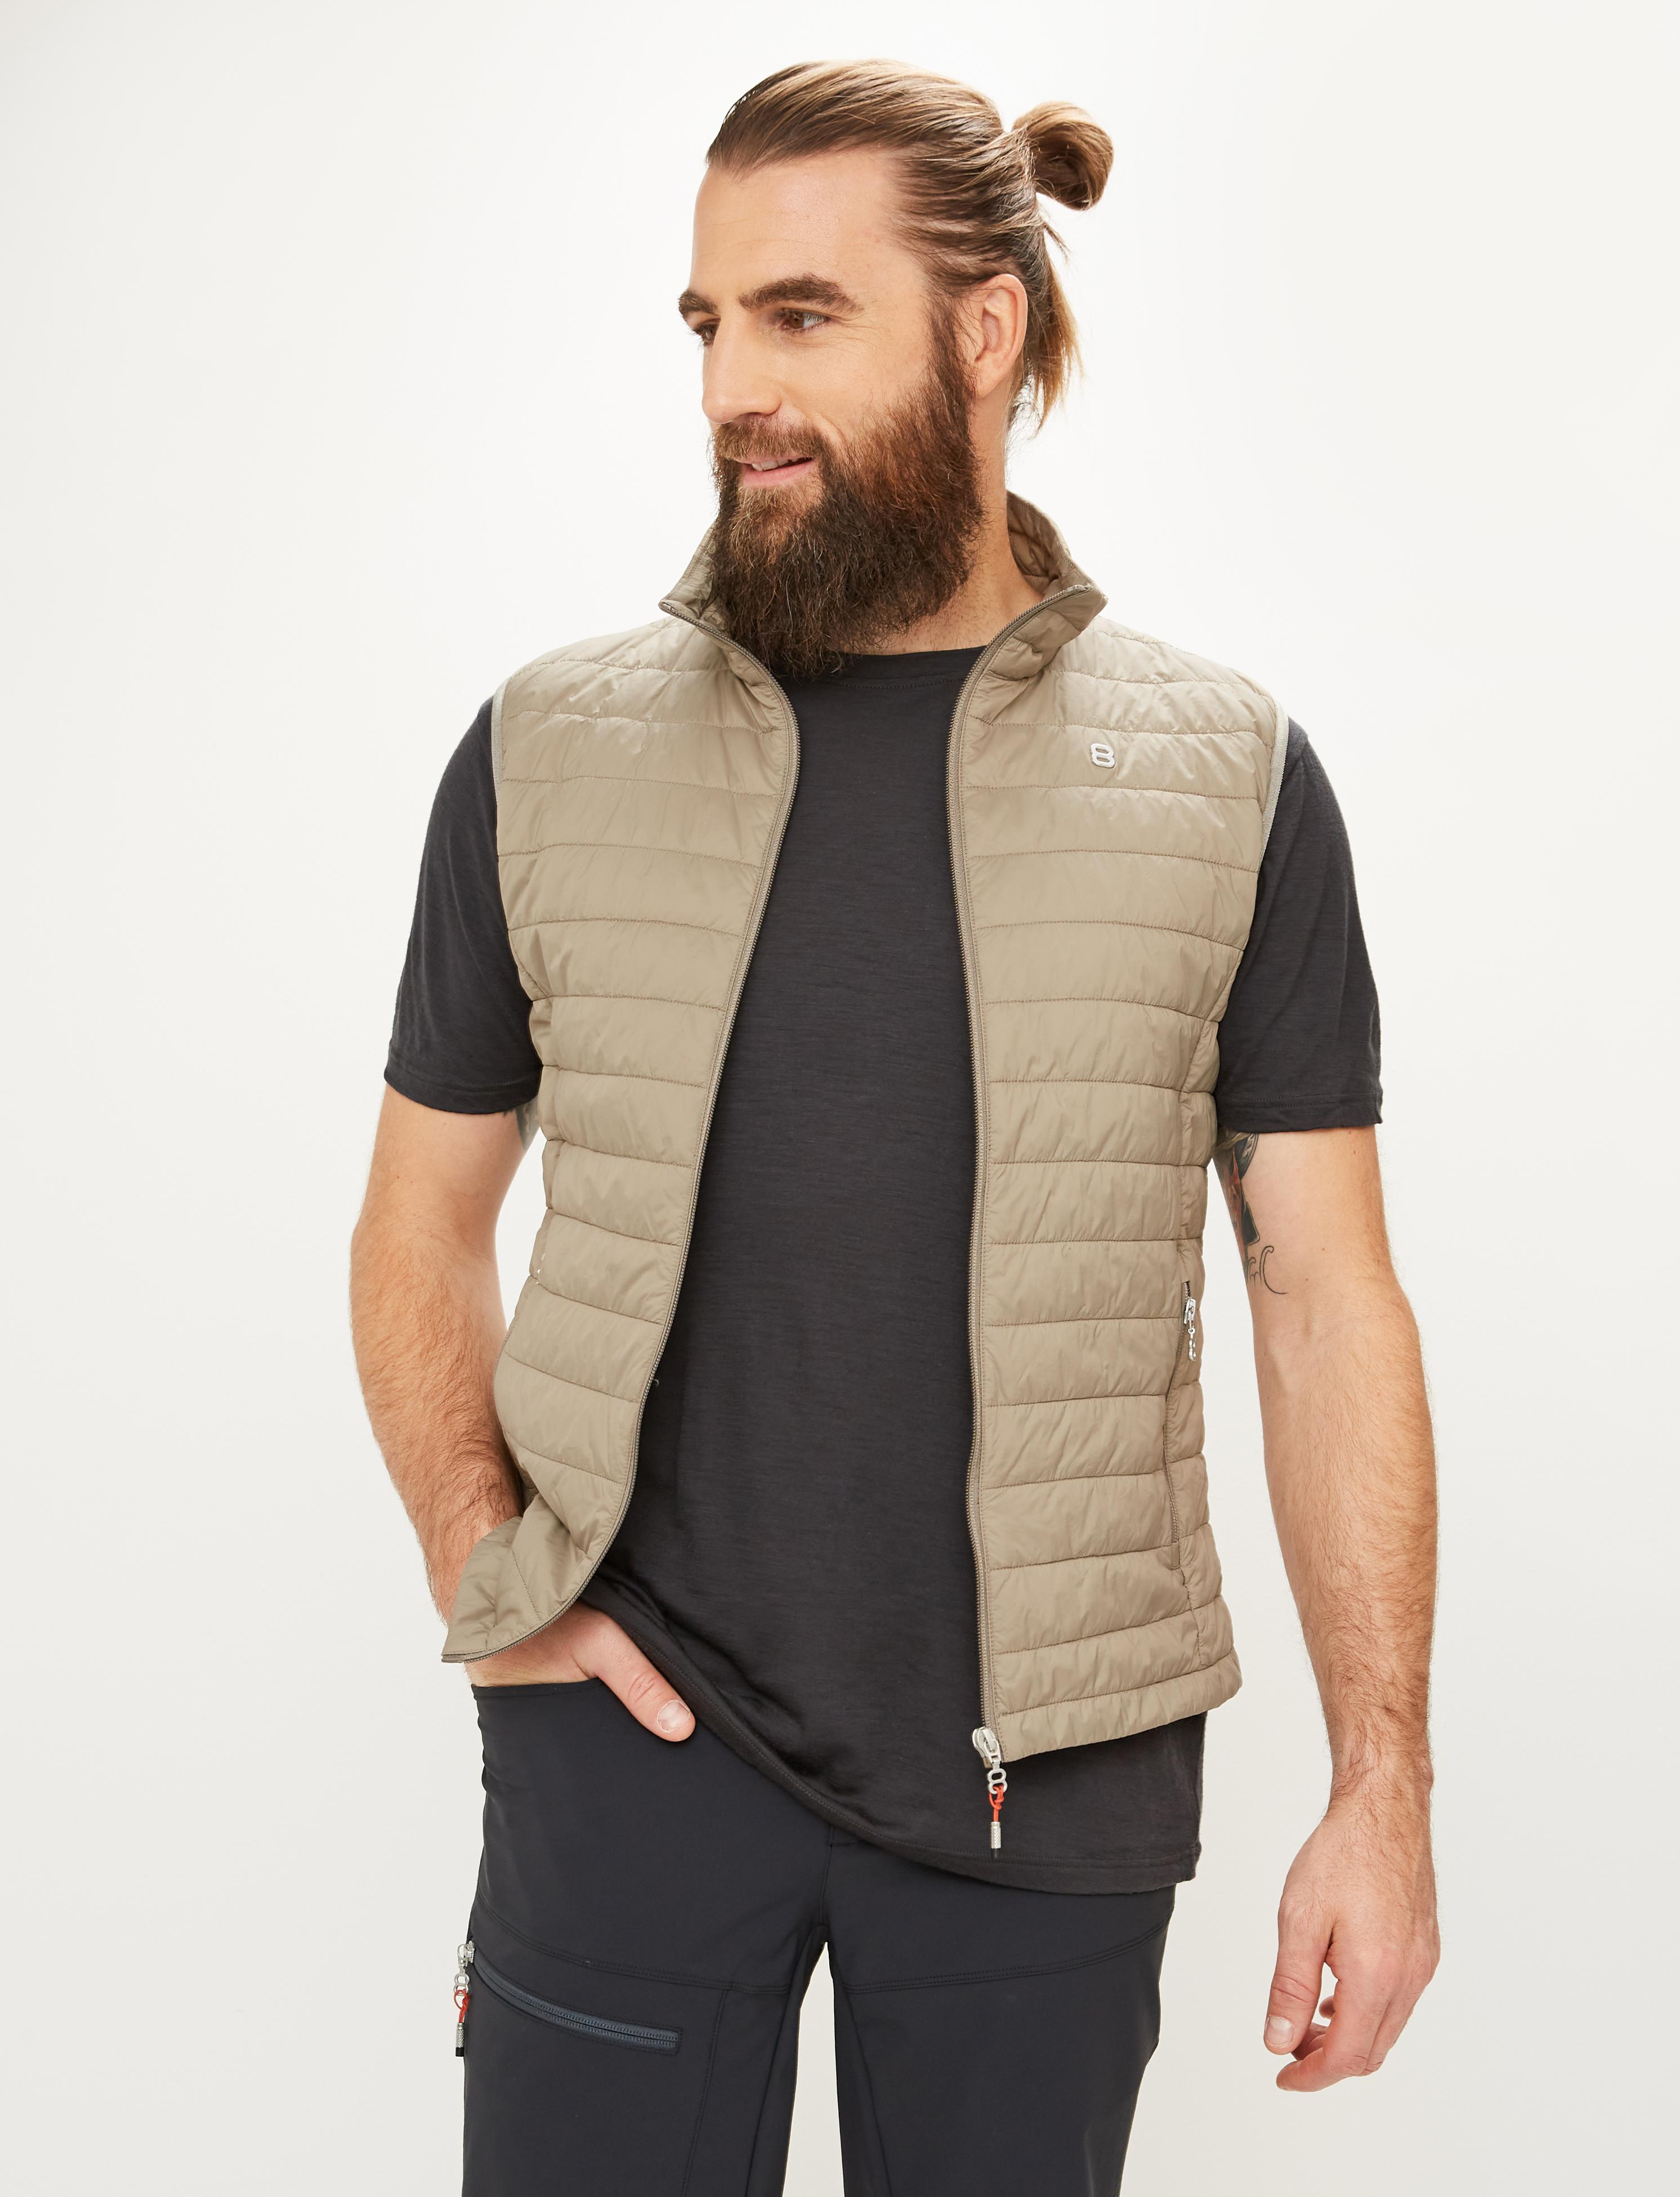 Nova Hybrid Vest Fallen Rock - Beige lightweight vest men